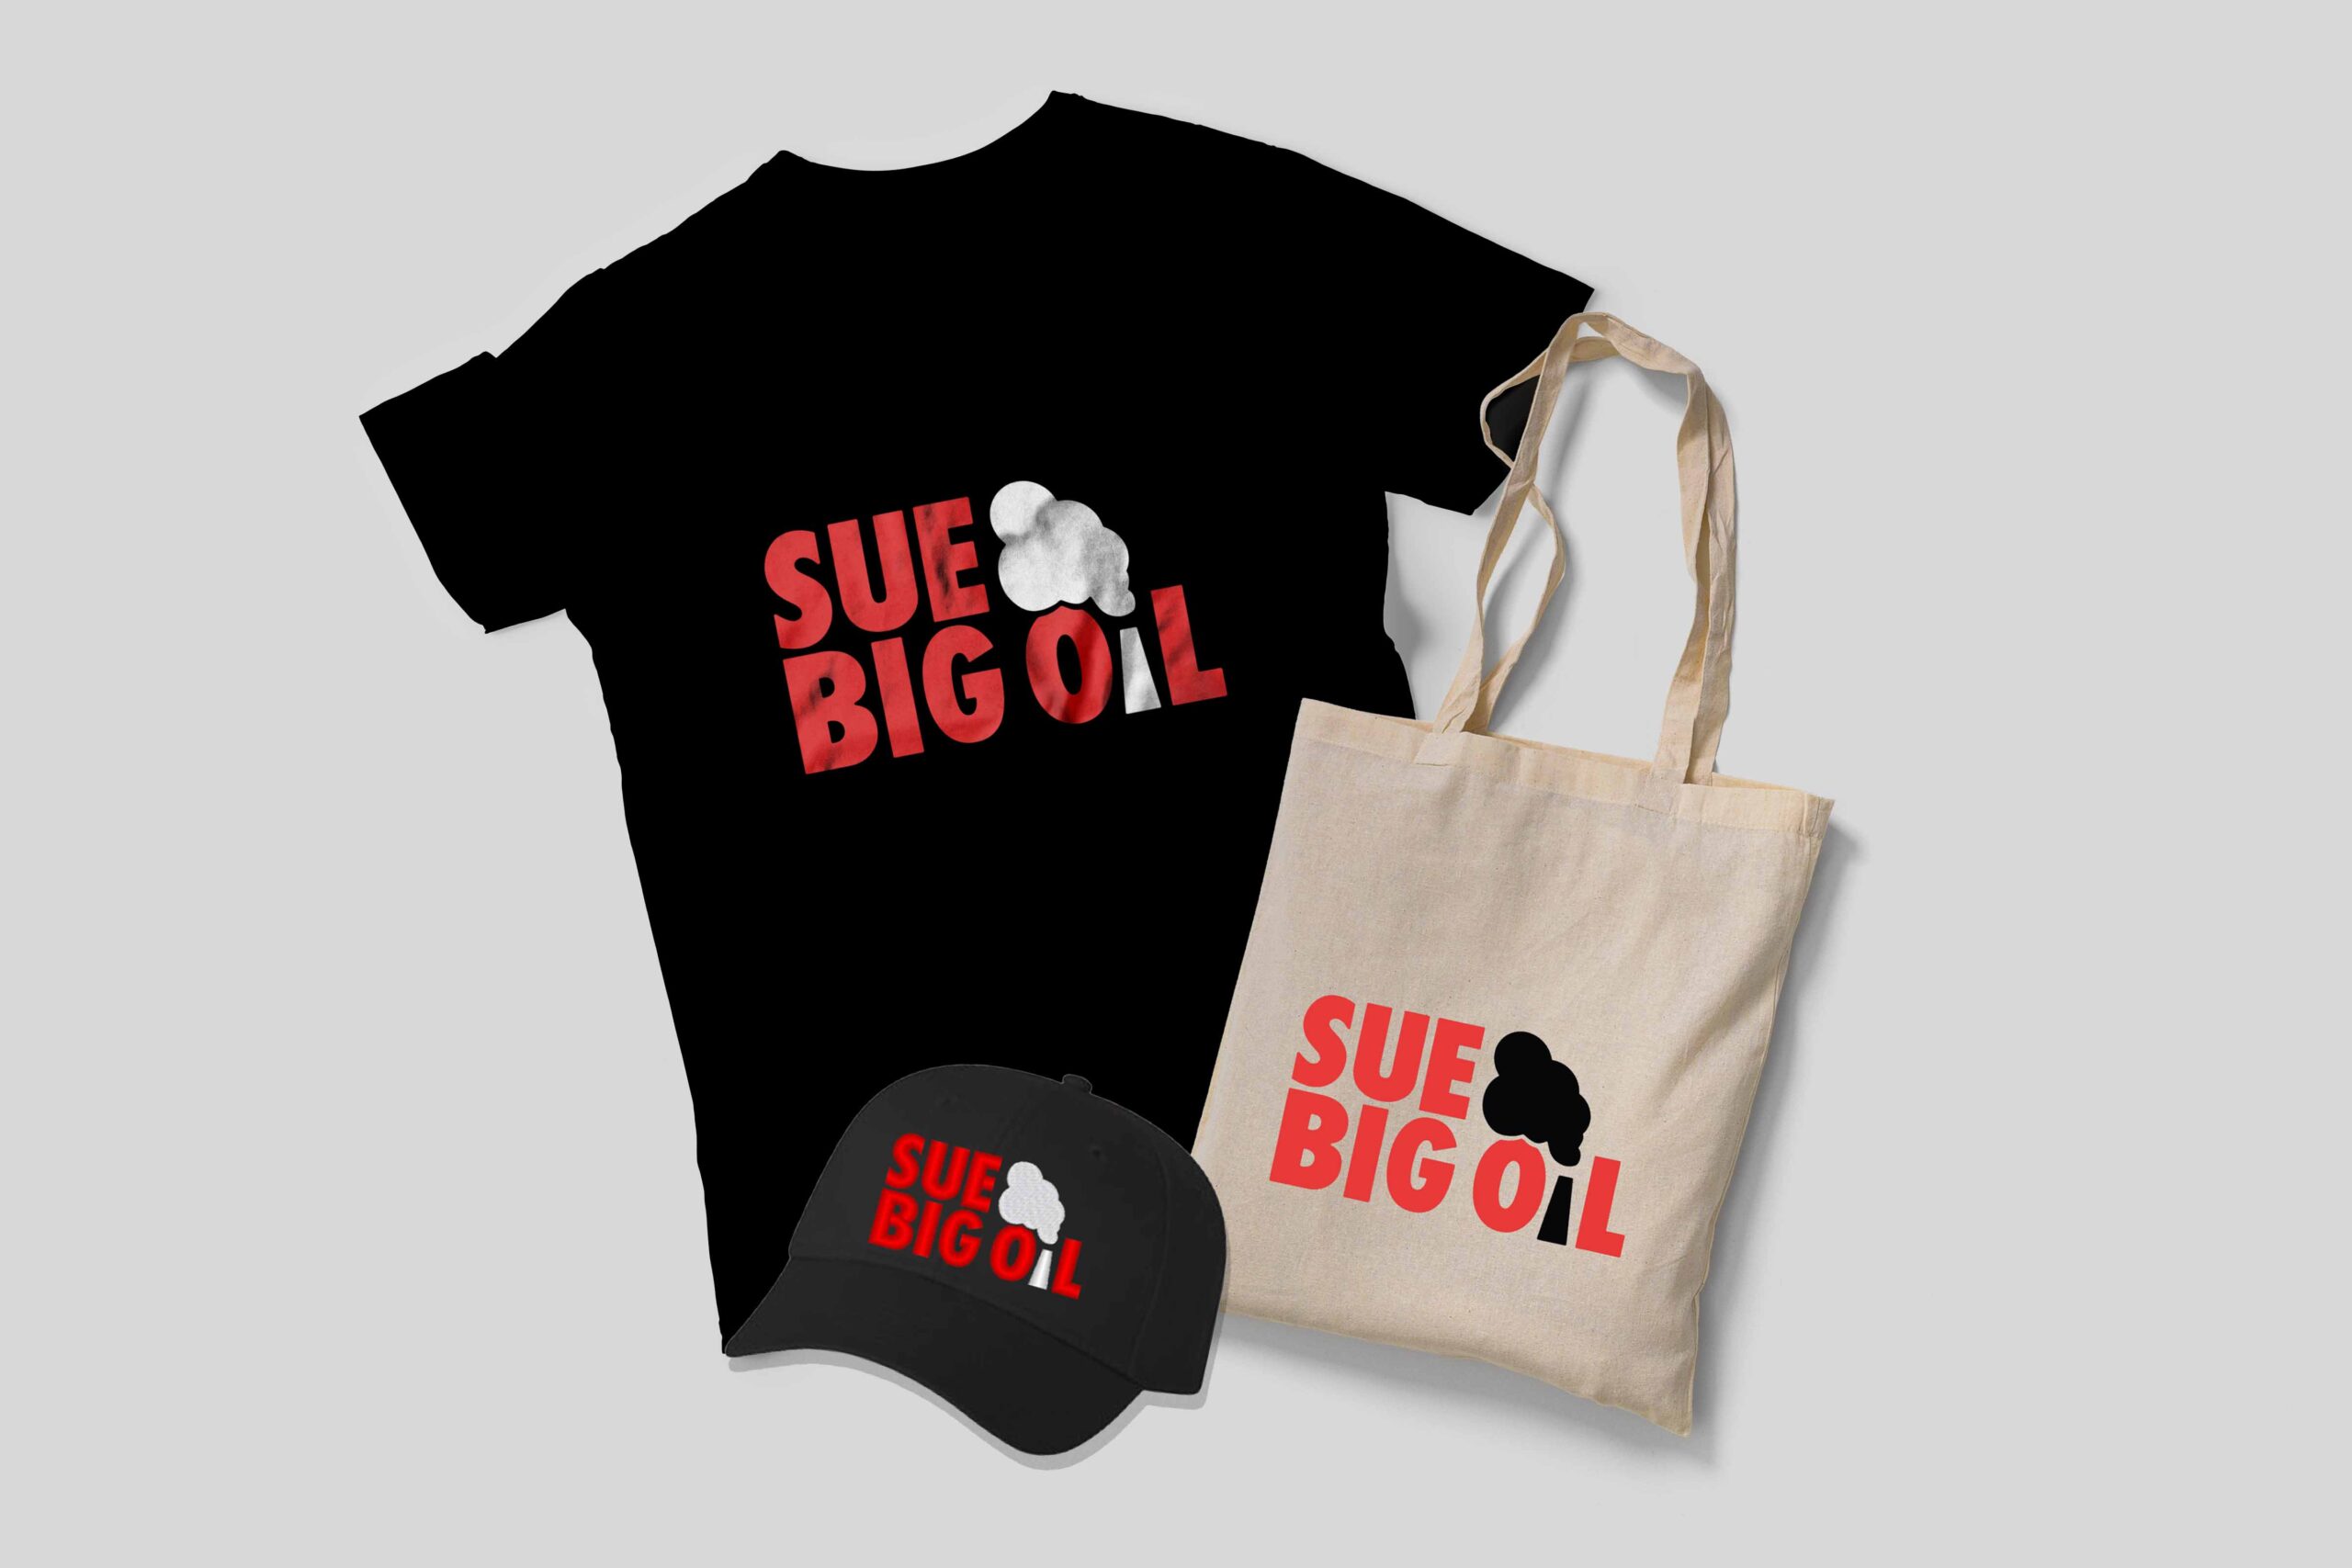 Sue Big Oil branded merchandise